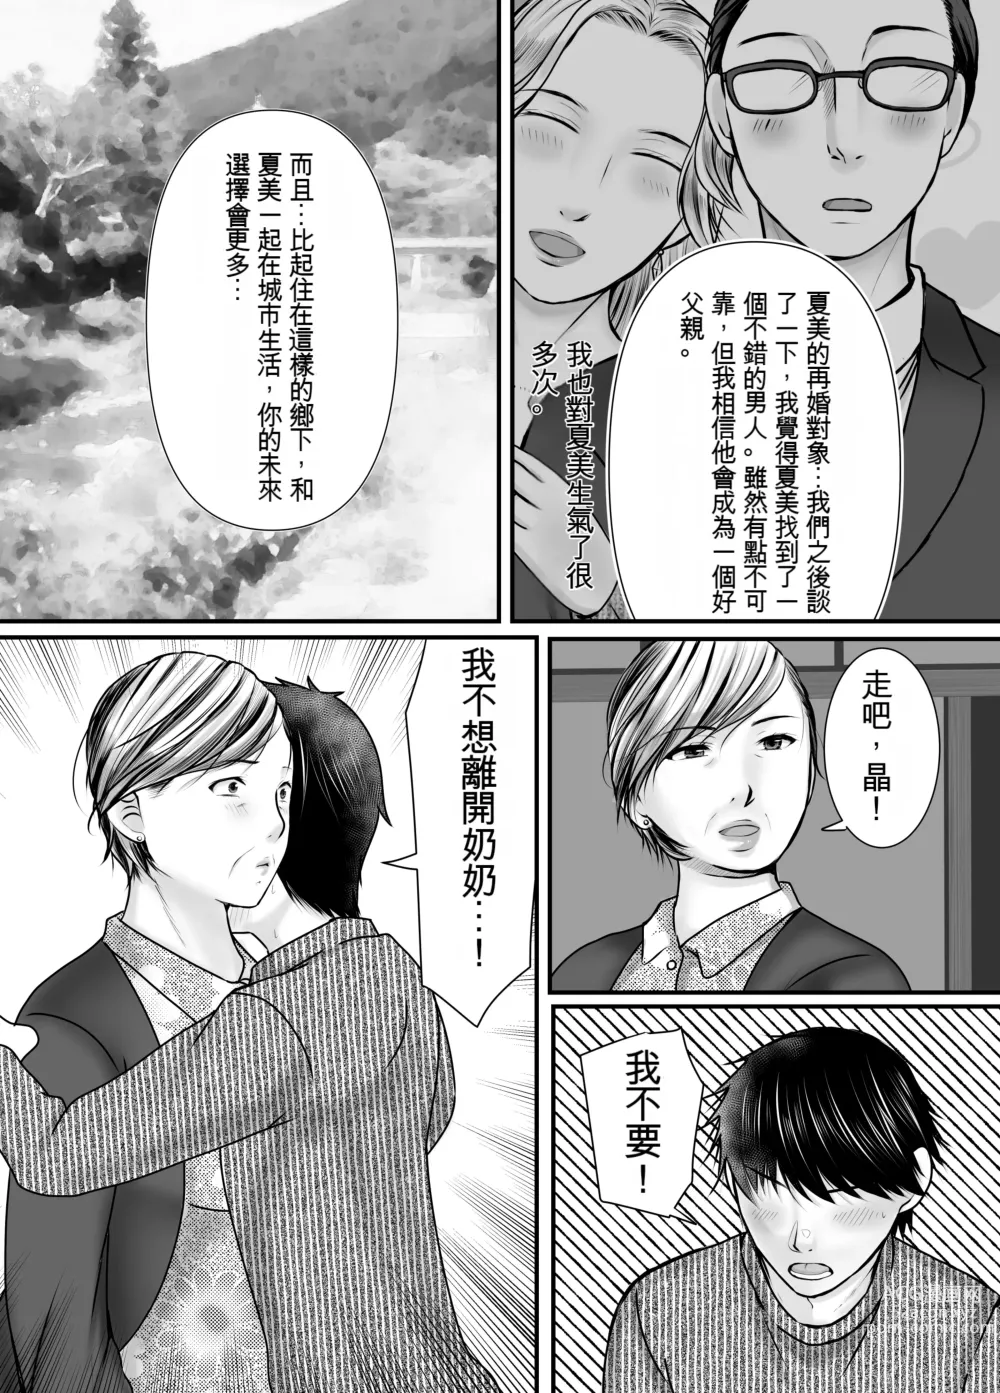 Page 35 of manga 祖母與孫子 ~孫子的第一次被內射的那一天~